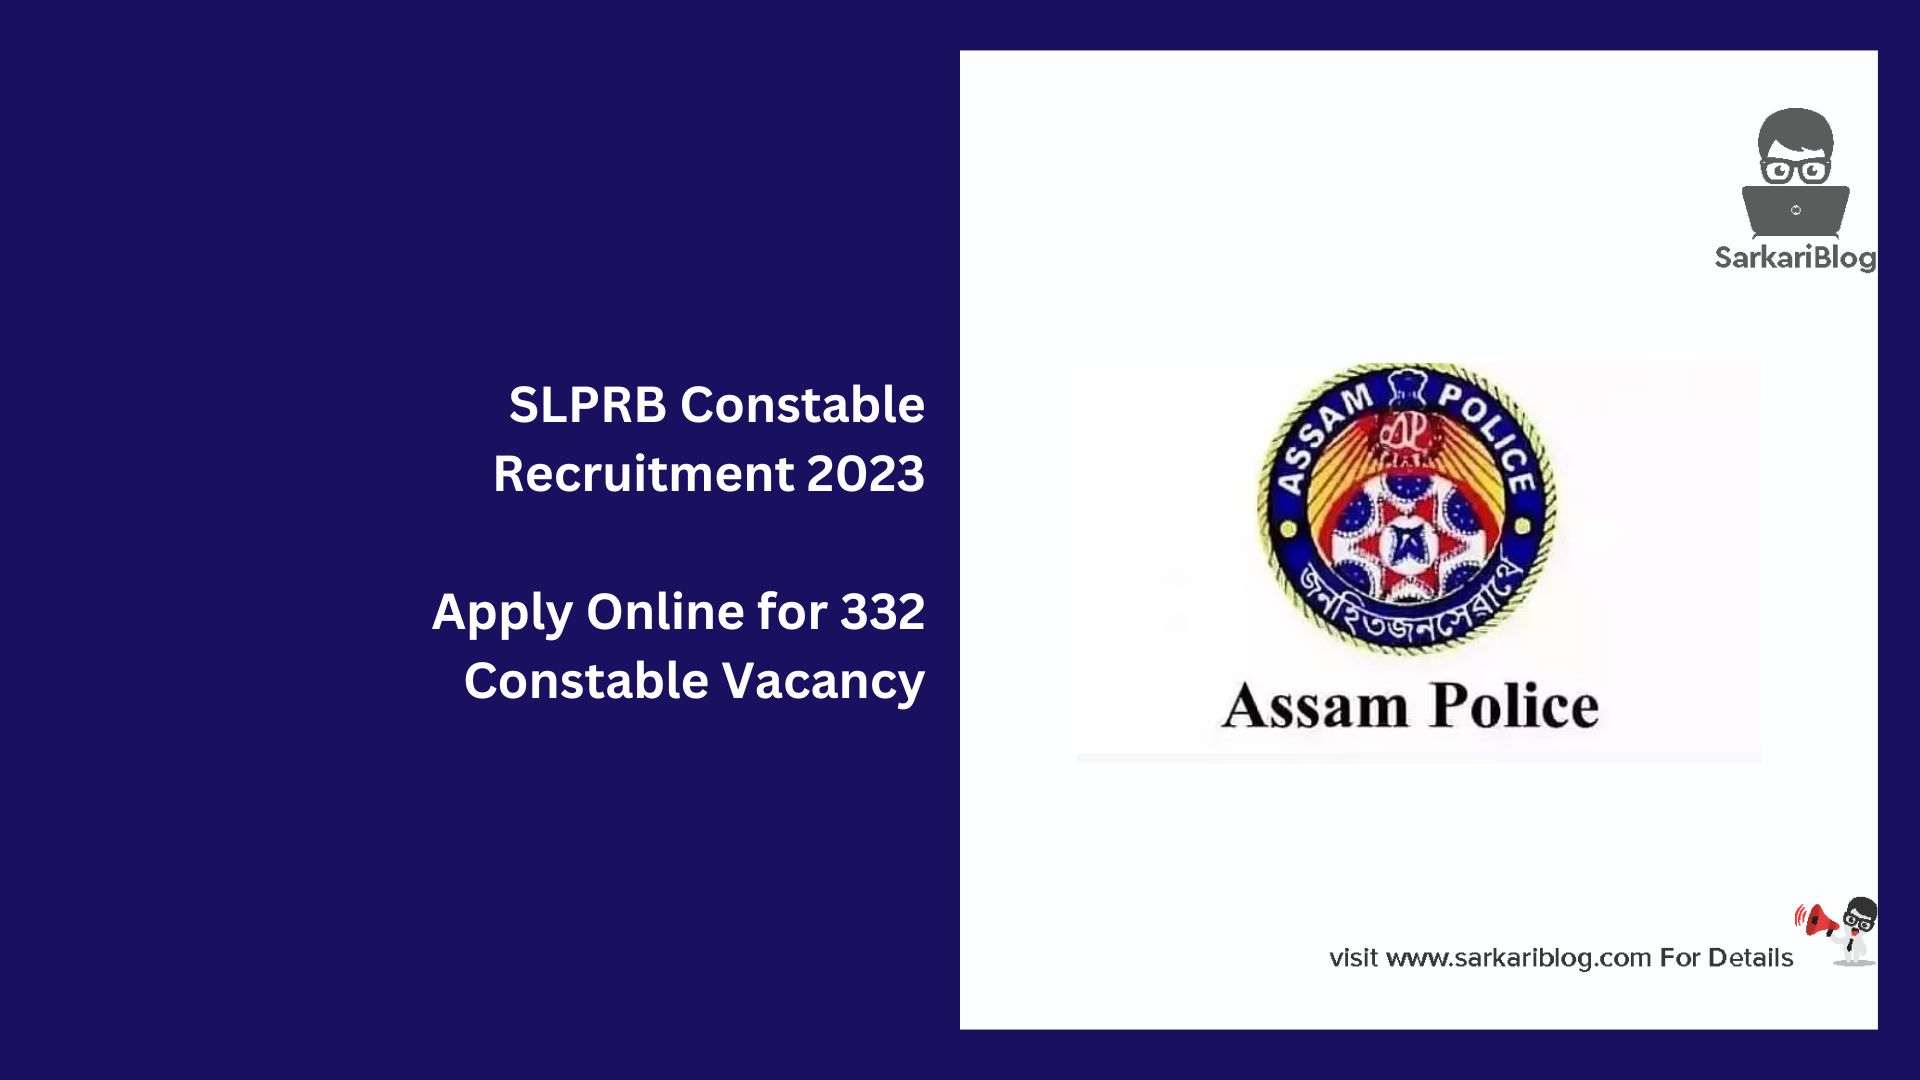 SLPRB Constable Recruitment 2023